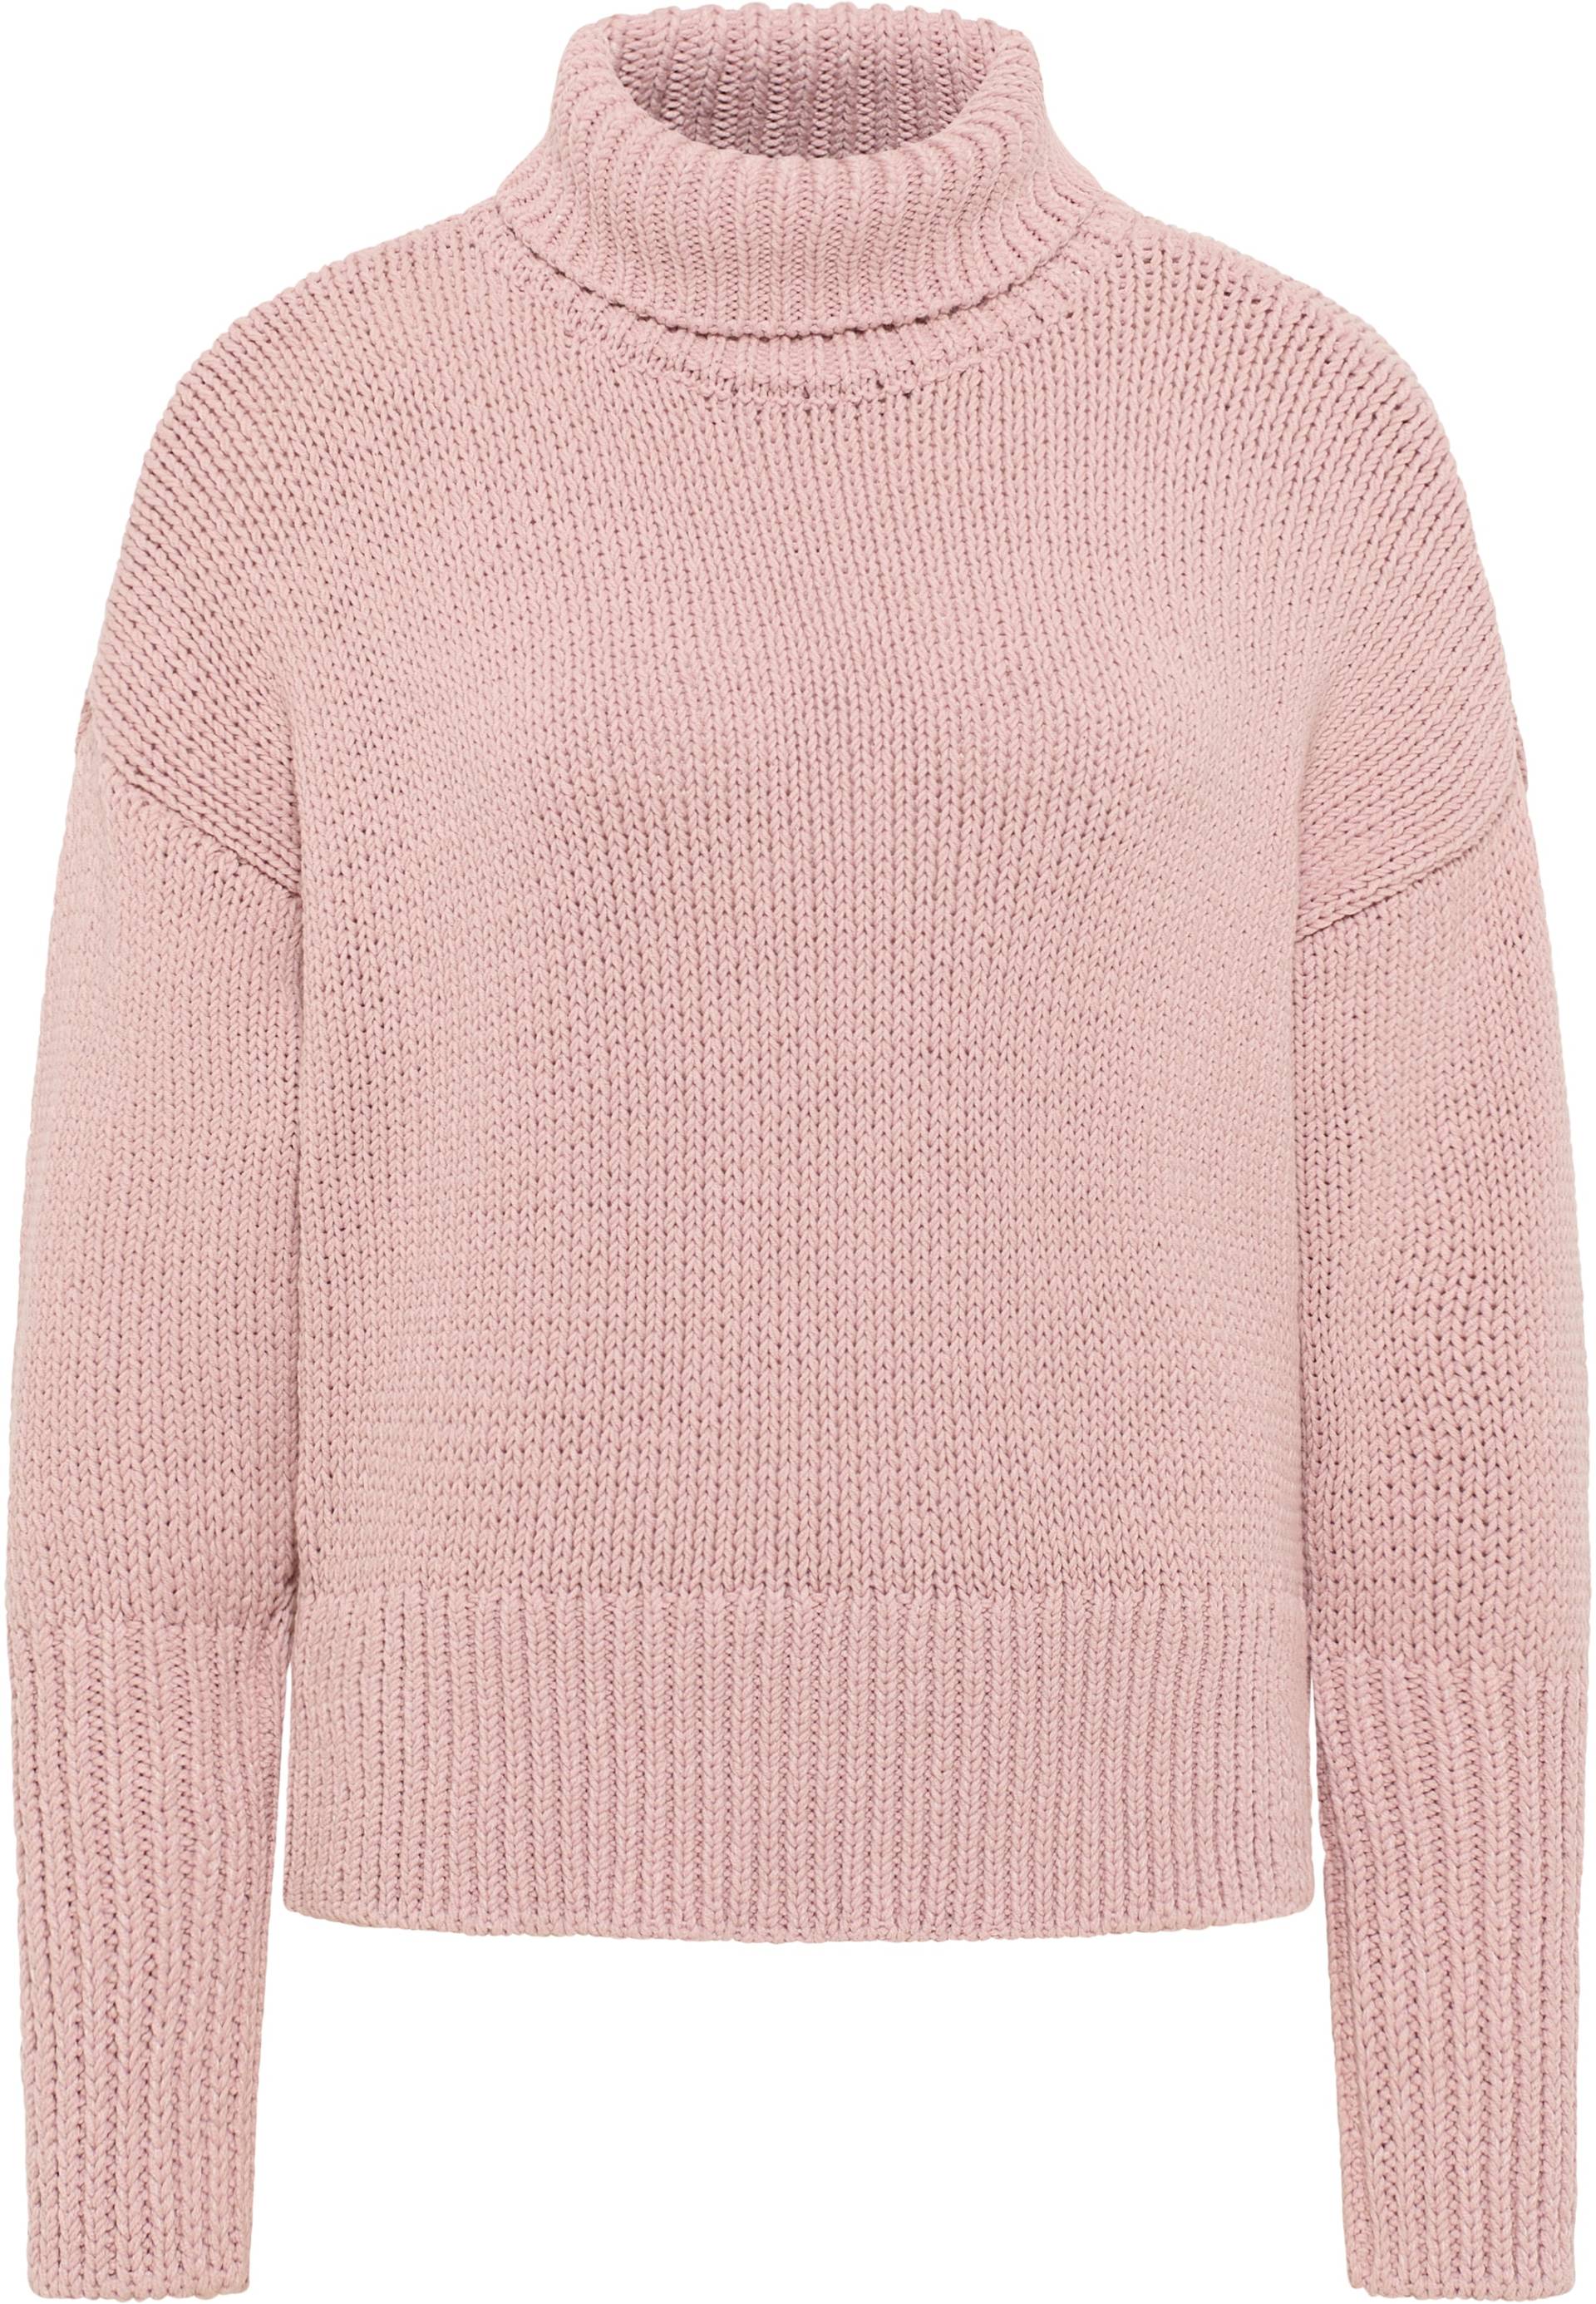 MUSTANG Sweater »Rollkragenpullover« von mustang